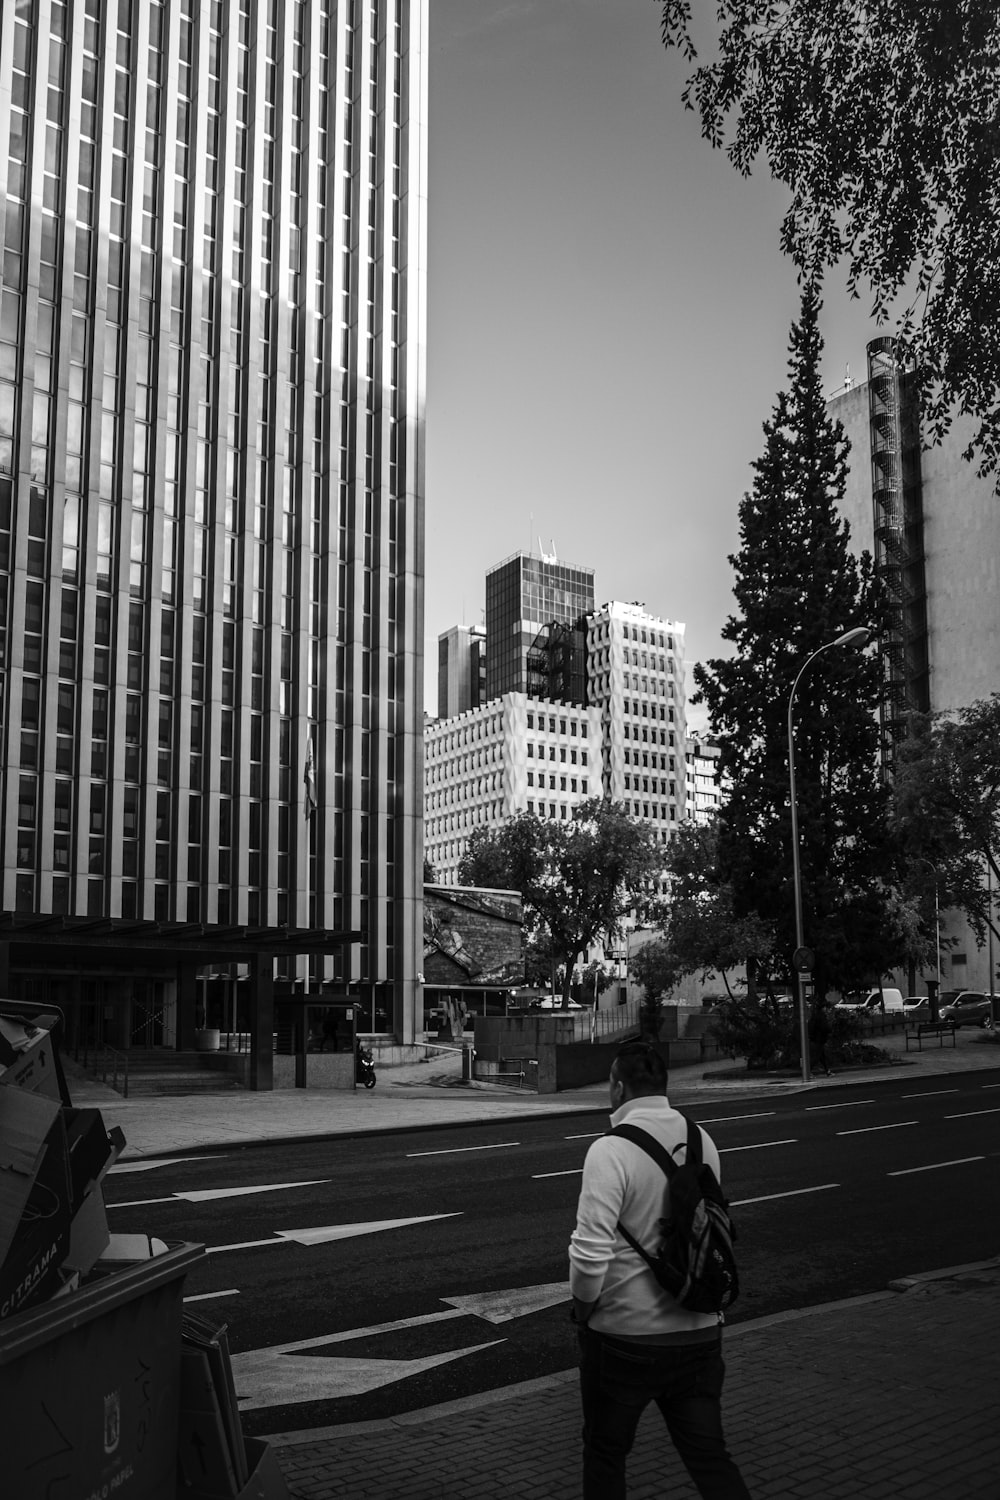 a man walking down a sidewalk next to tall buildings